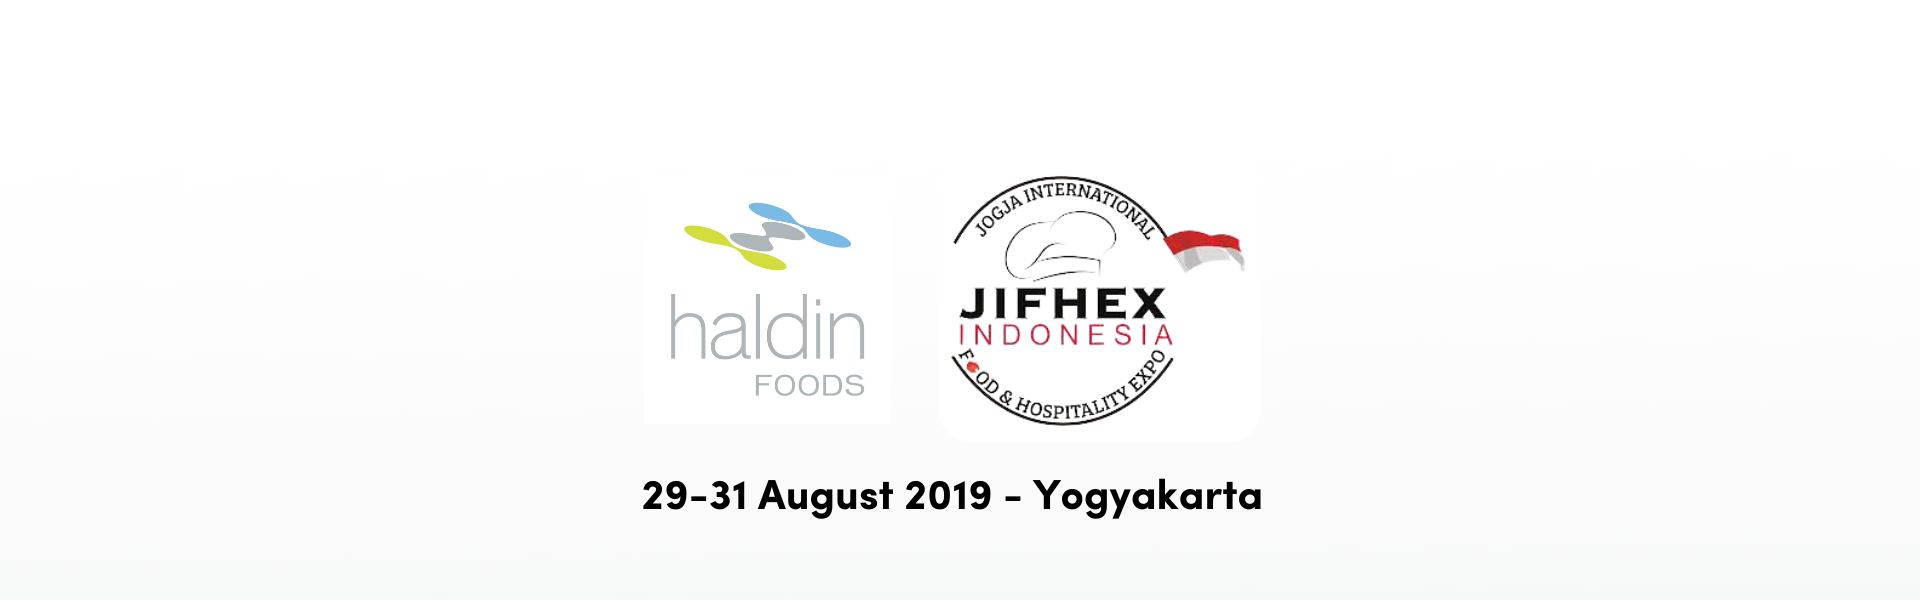 haldinfoods at JIFHEX Indonesia